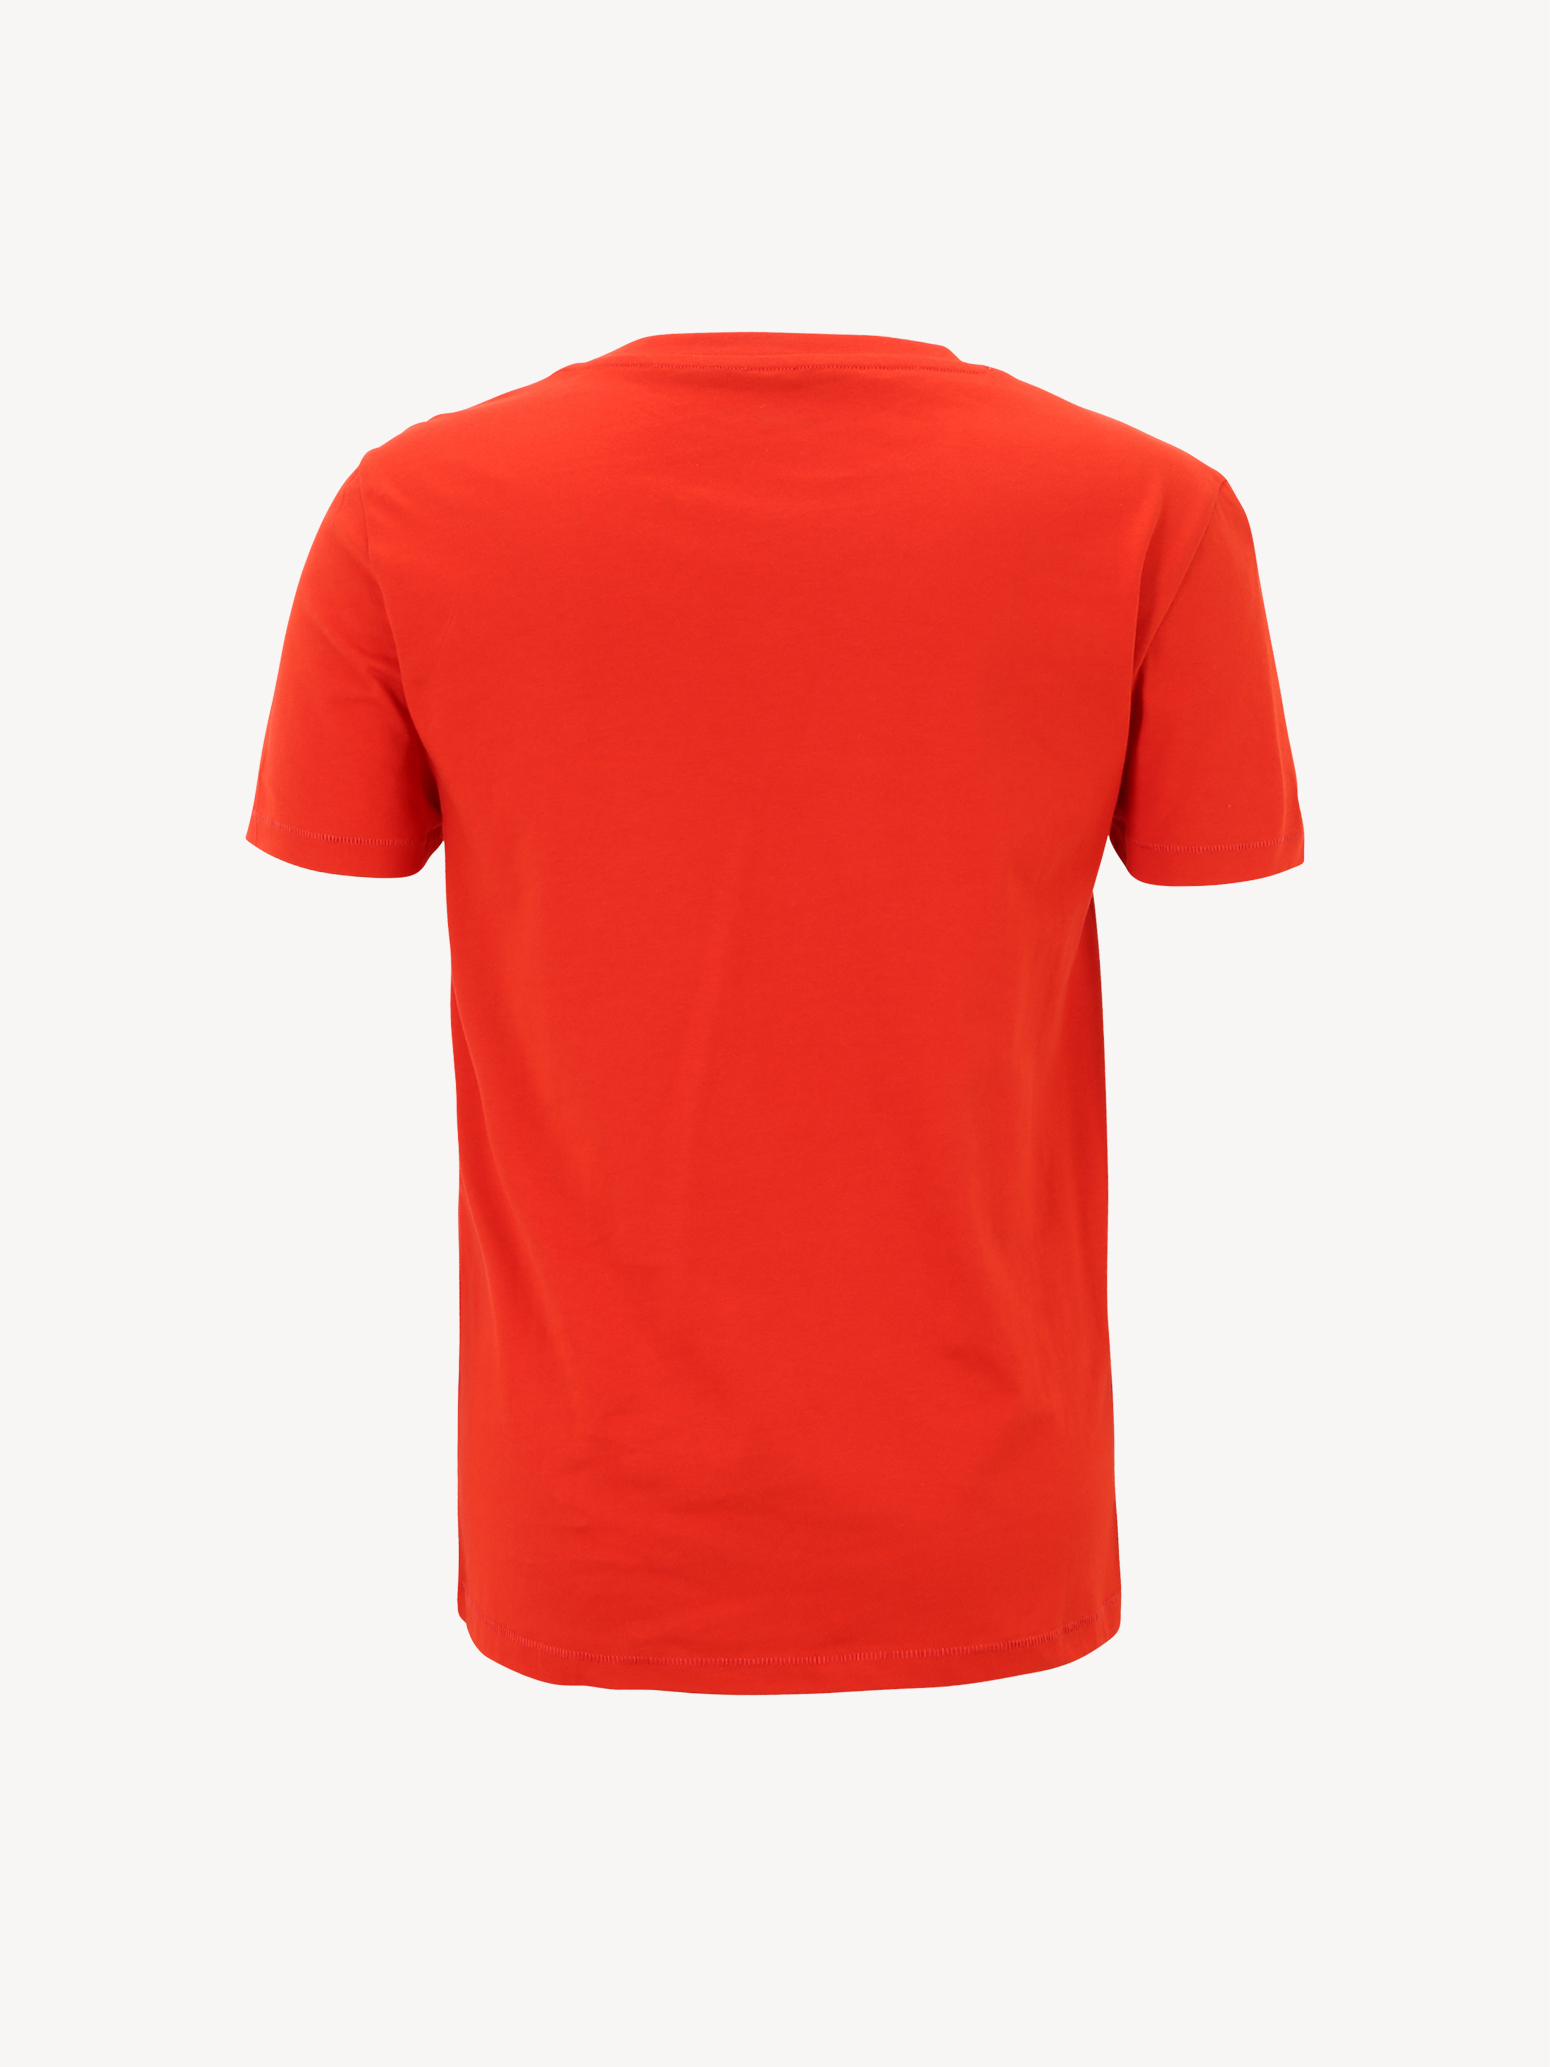 Tamaris Shirts & - Tops TAW0121-30042: online T-Shirt kaufen! rot